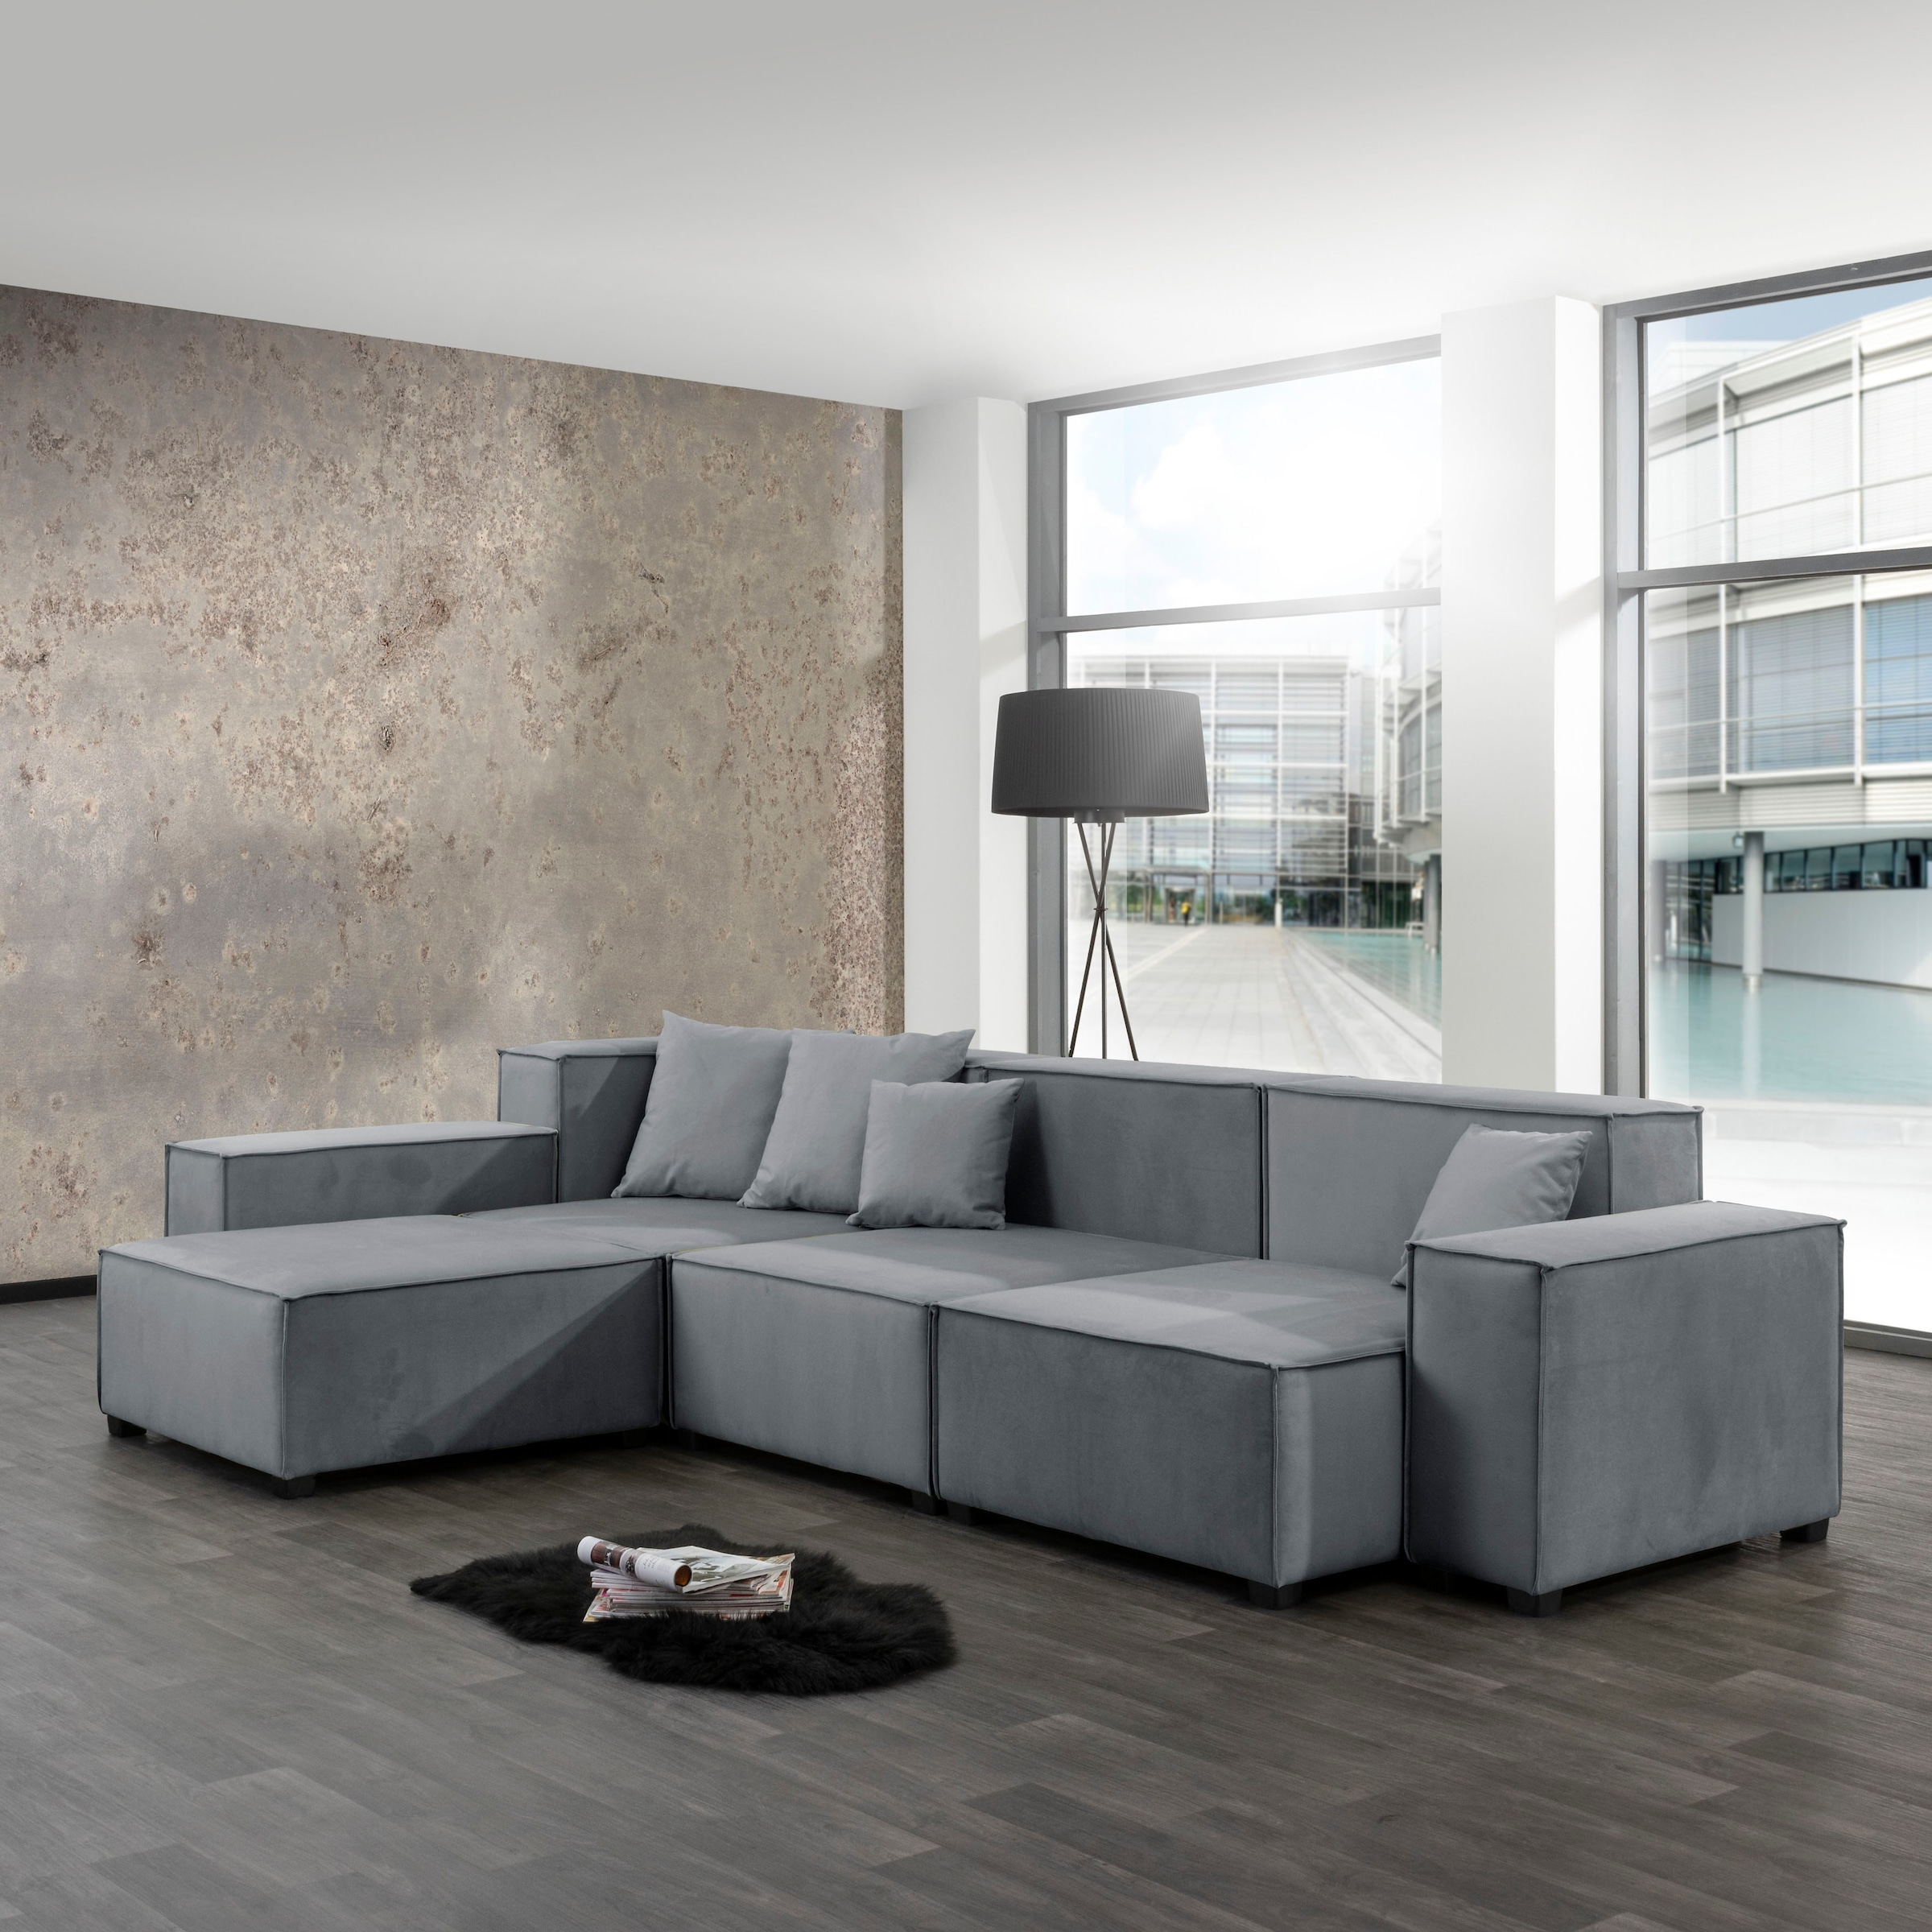 Max Winzer® Wohnlandschaft »MOVE«, (Set), Sofa-Set 04 aus 10 Sitzelementen, inklusive 4 Zierkissen, kombinierbar